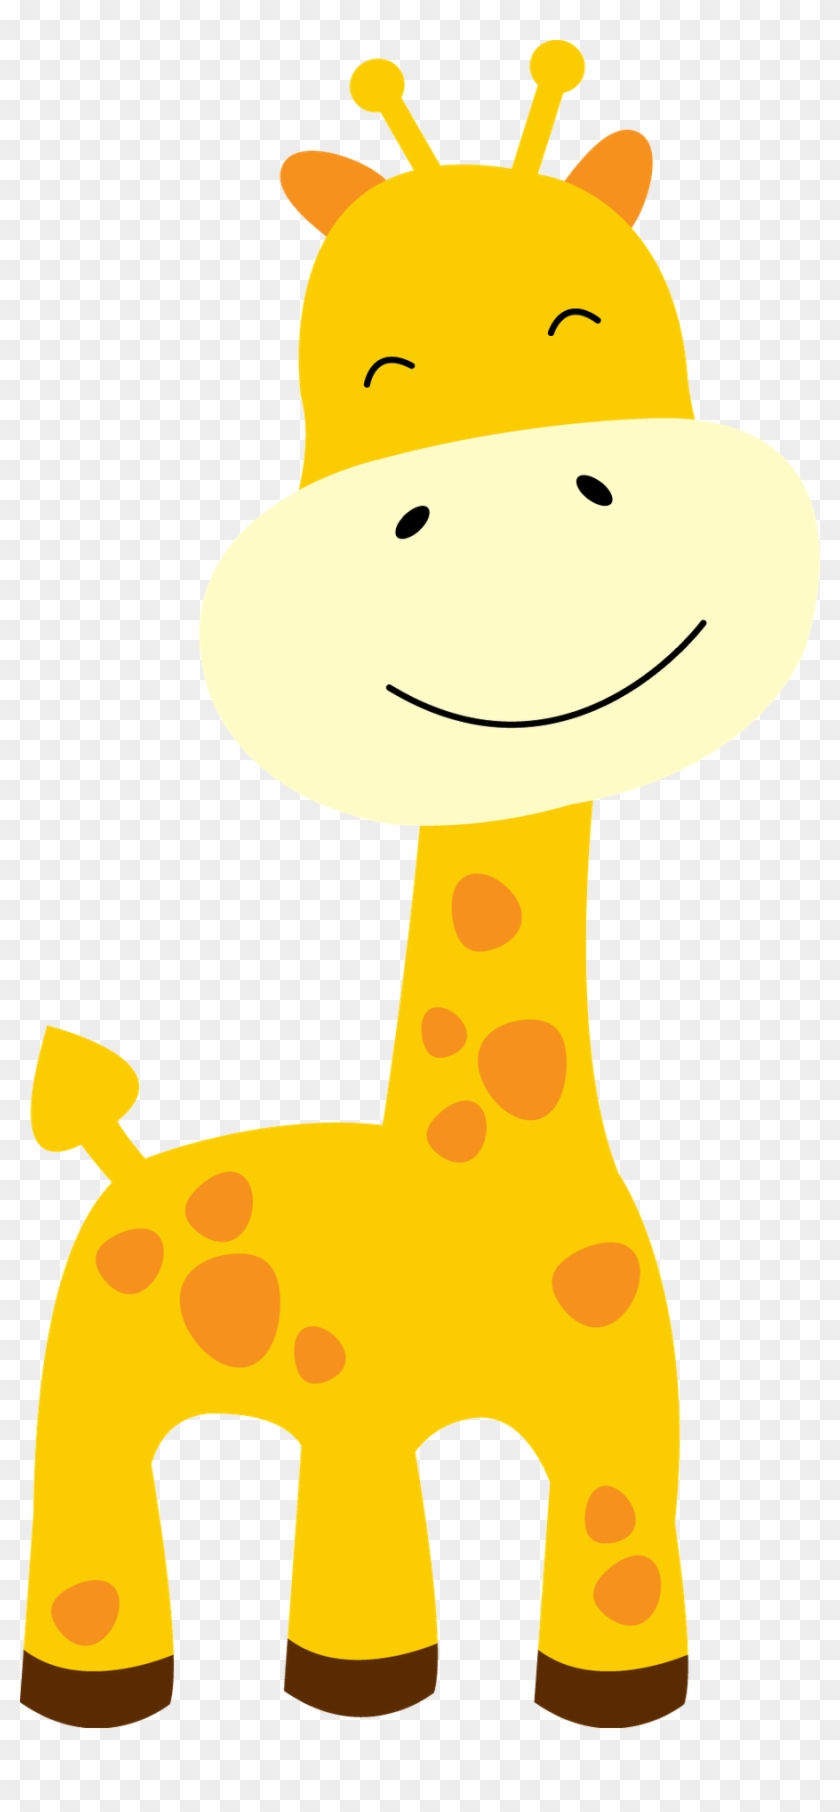 Giraffe Clipart | Giraffe Graphics | Giraffe Printable | Instant ...